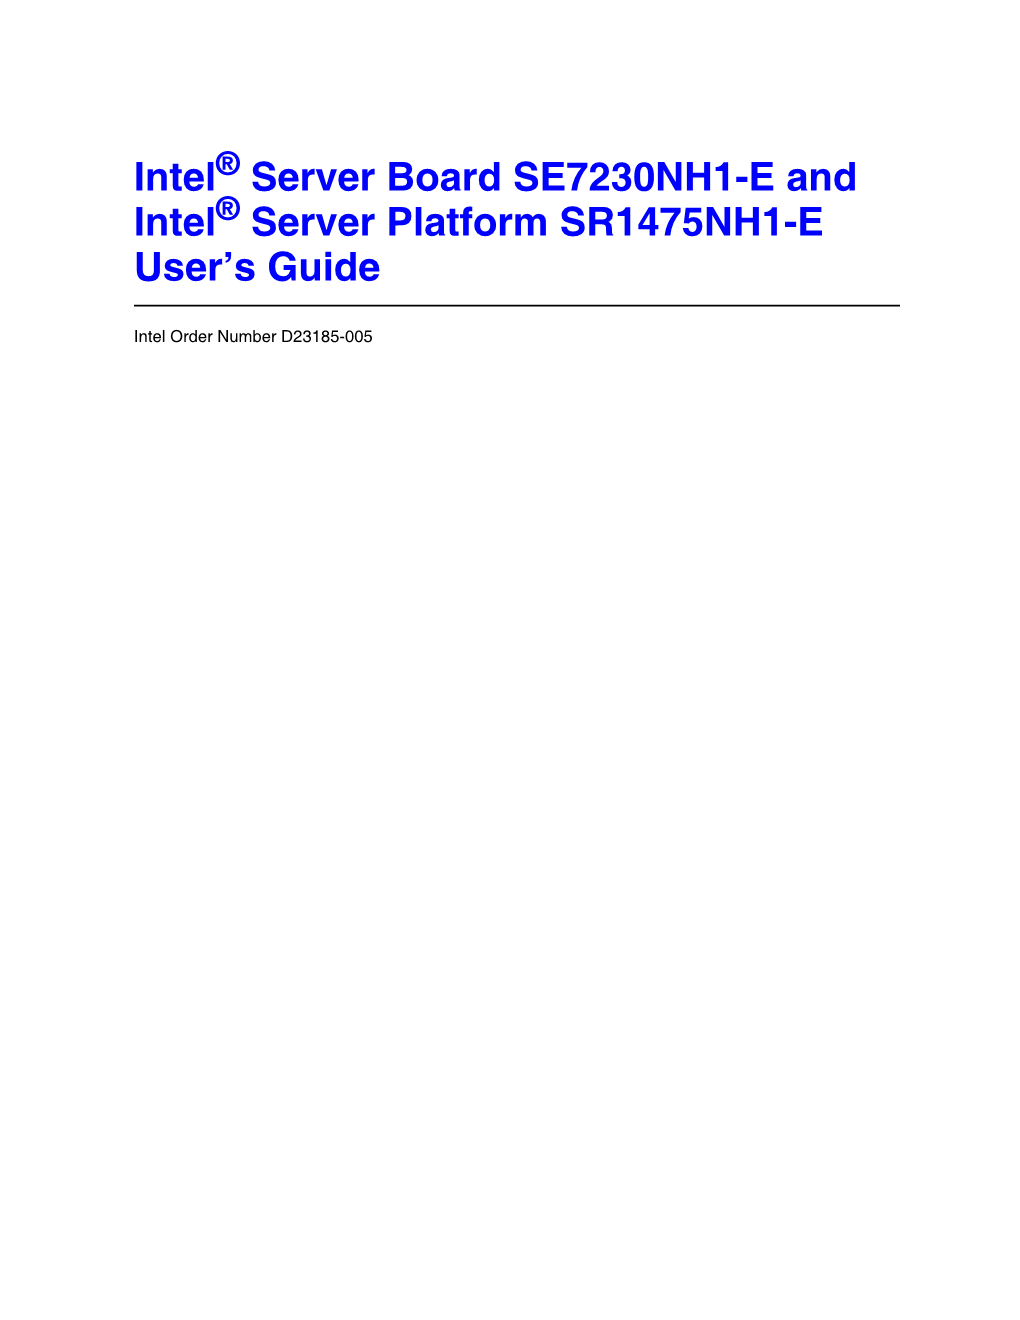 Intel Server Board SE7230NH1-E and Intel Server Platform SR1475NH1-E